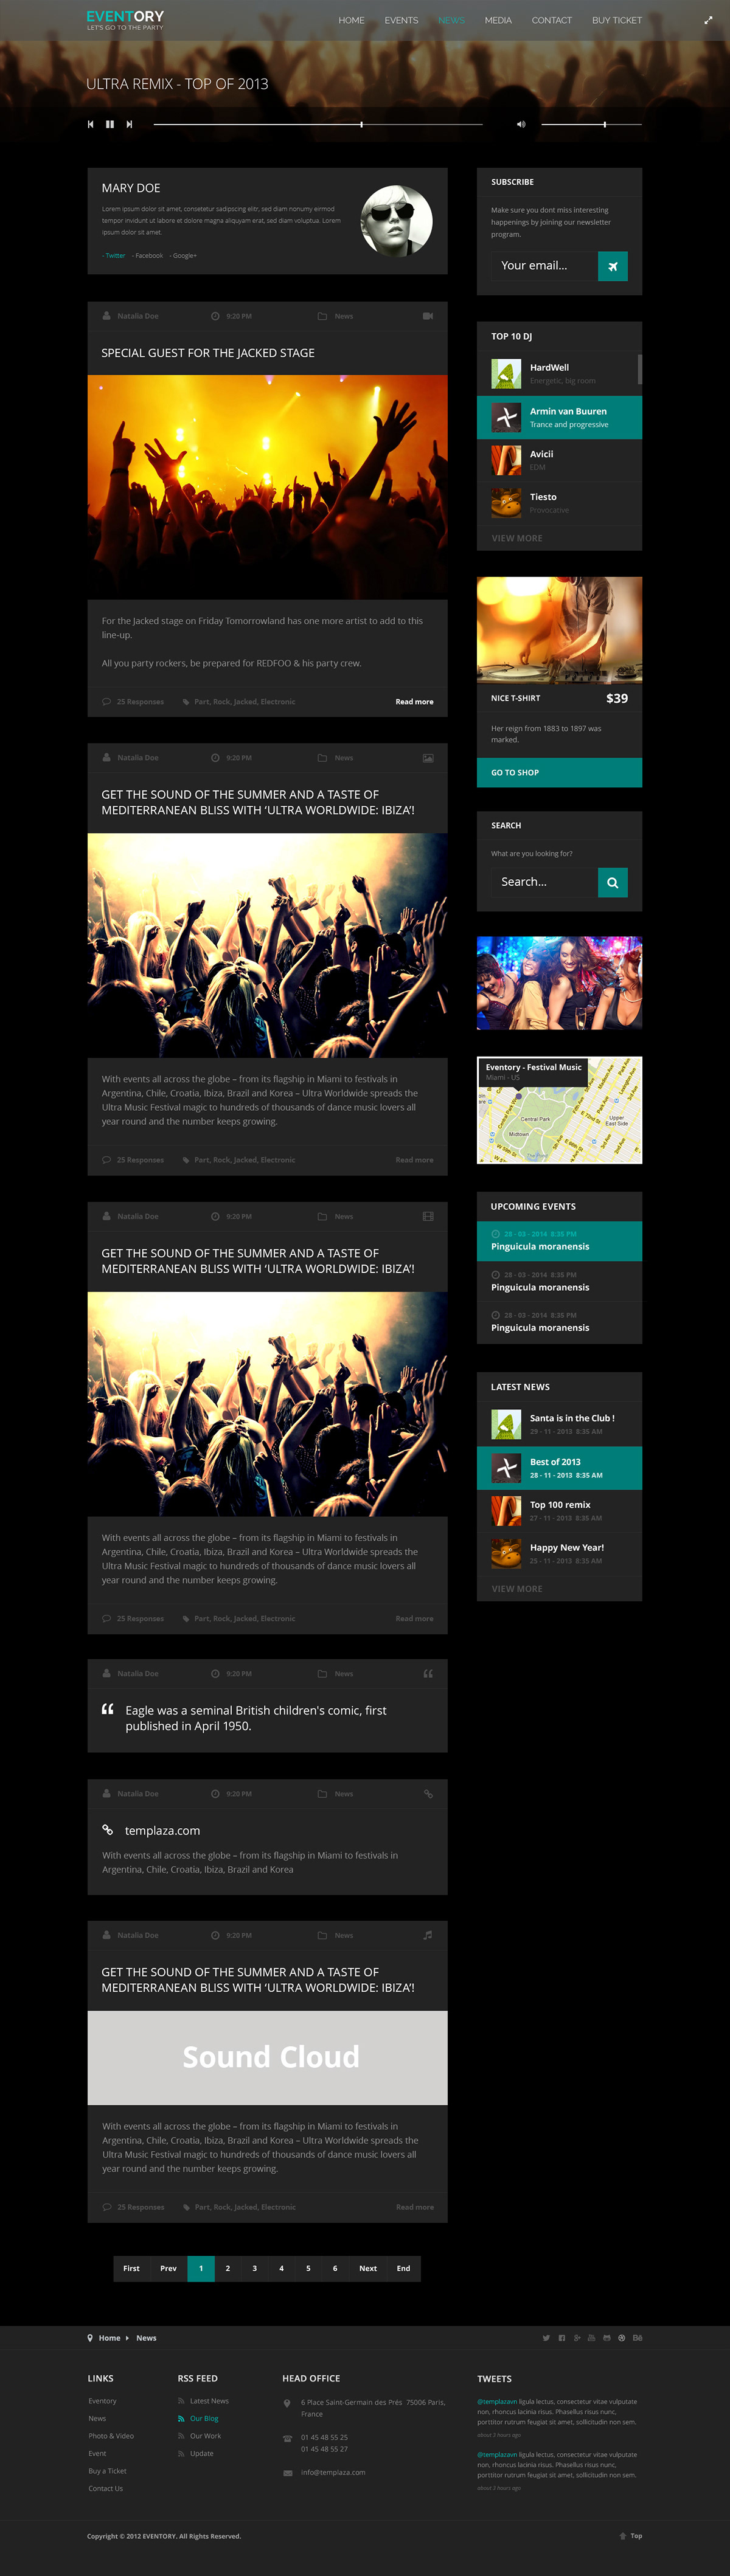 joomla template Events festival party clean modern DANCE   flat ux UI company studio agency